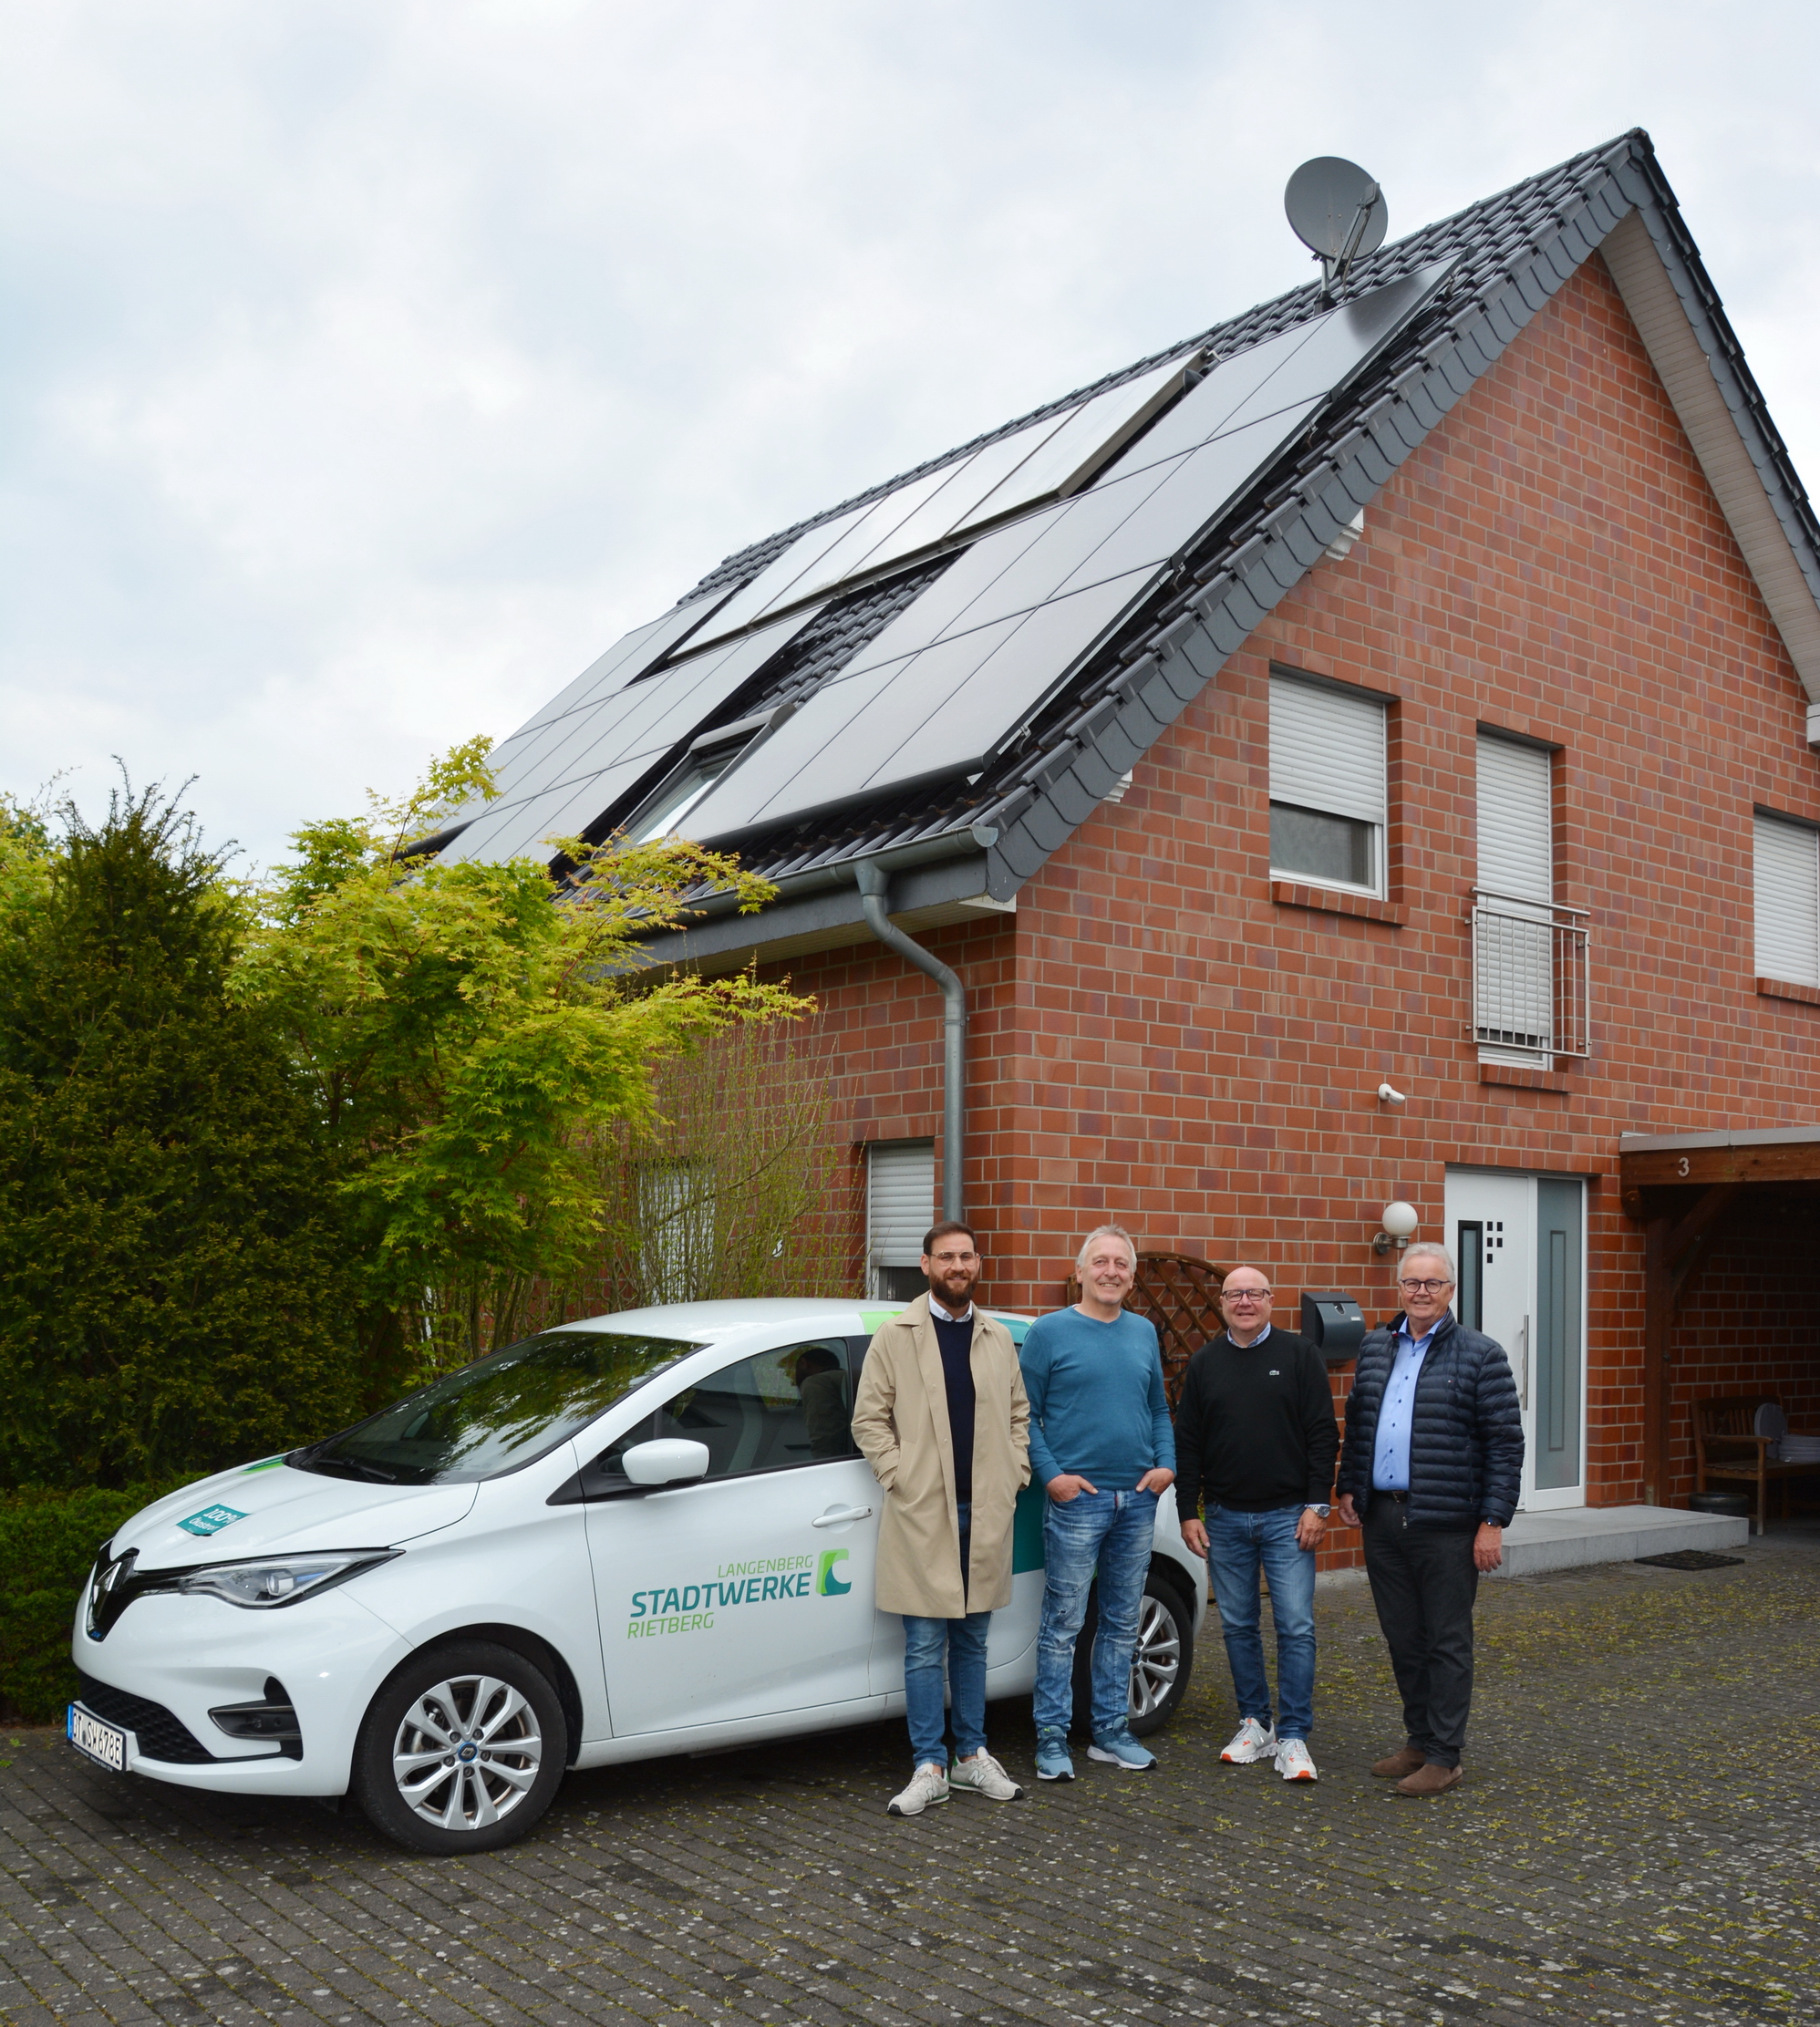 Energiewende - PV-Dachflächenanlage Stadtwerke Rietberg Langenberg